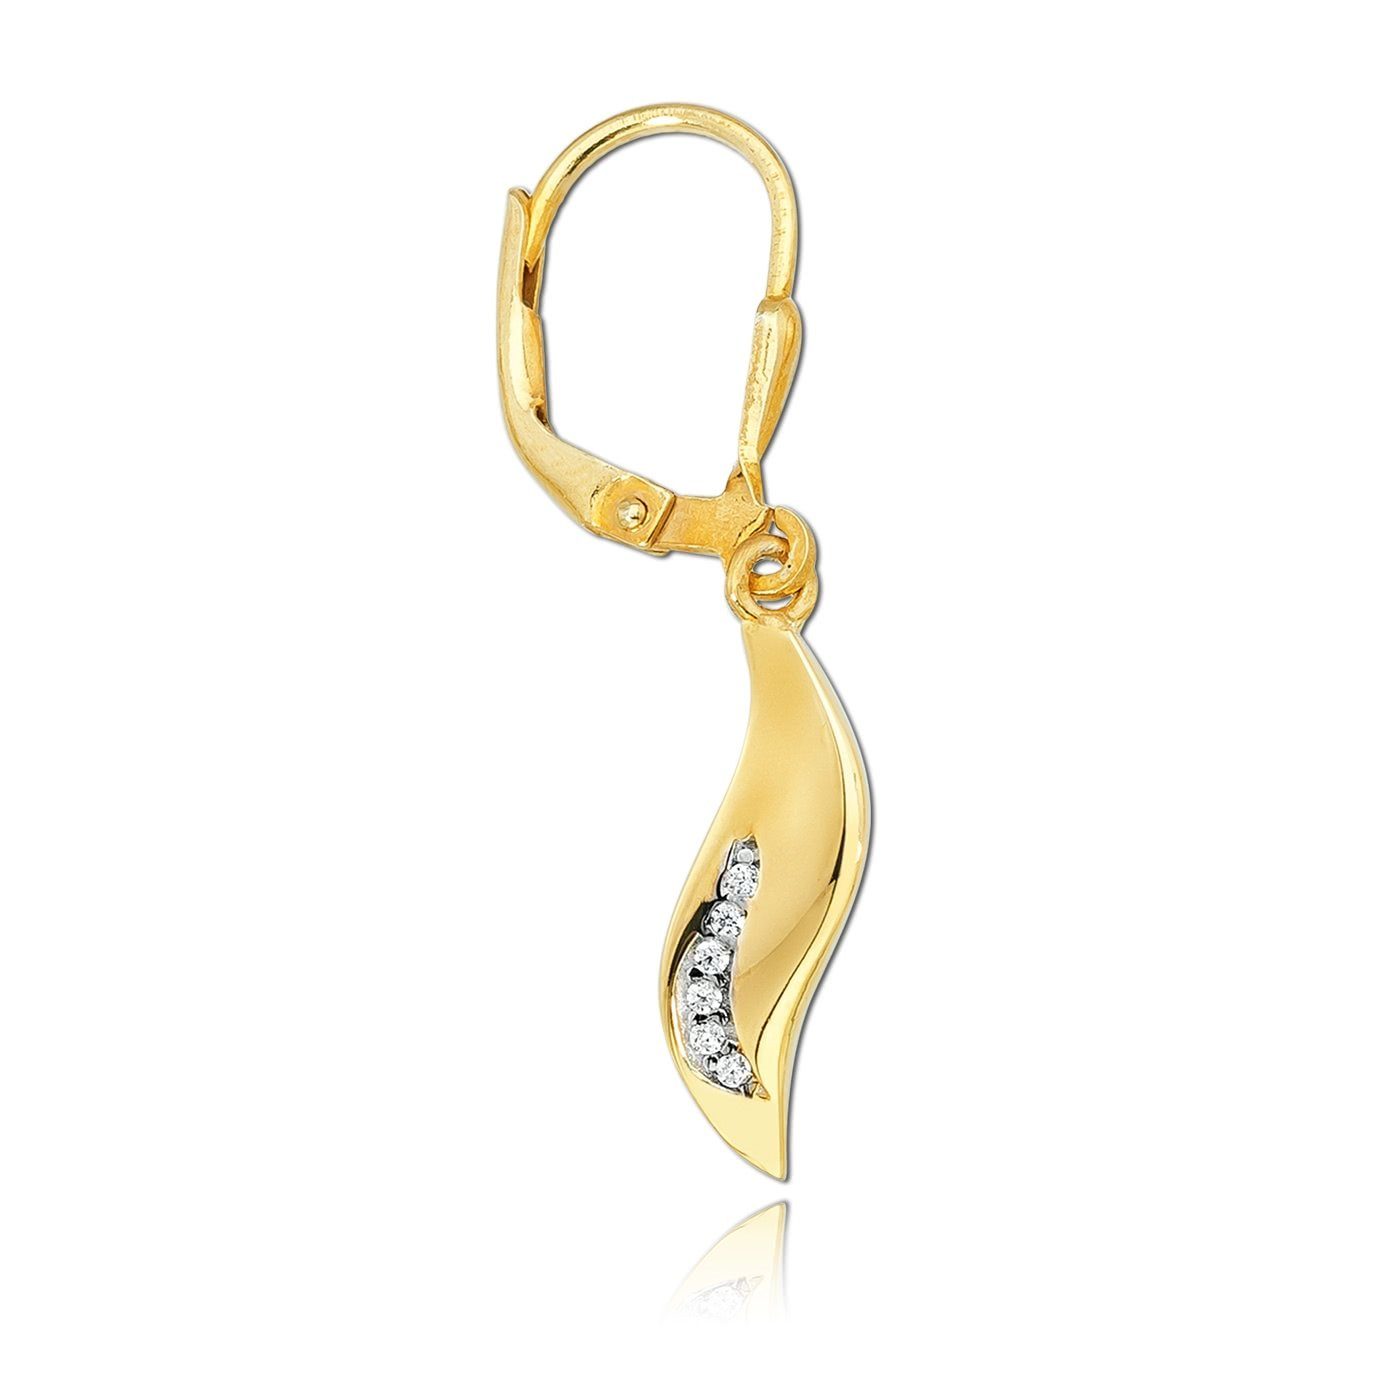 Balia Paar Ohrhänger Gold (Ohrhänger), Ohrhänger Karat, - 8 für Damen gold Ohrhänger Balia (Welle) weiß, aus 8K 333 Gelbgold Farbe